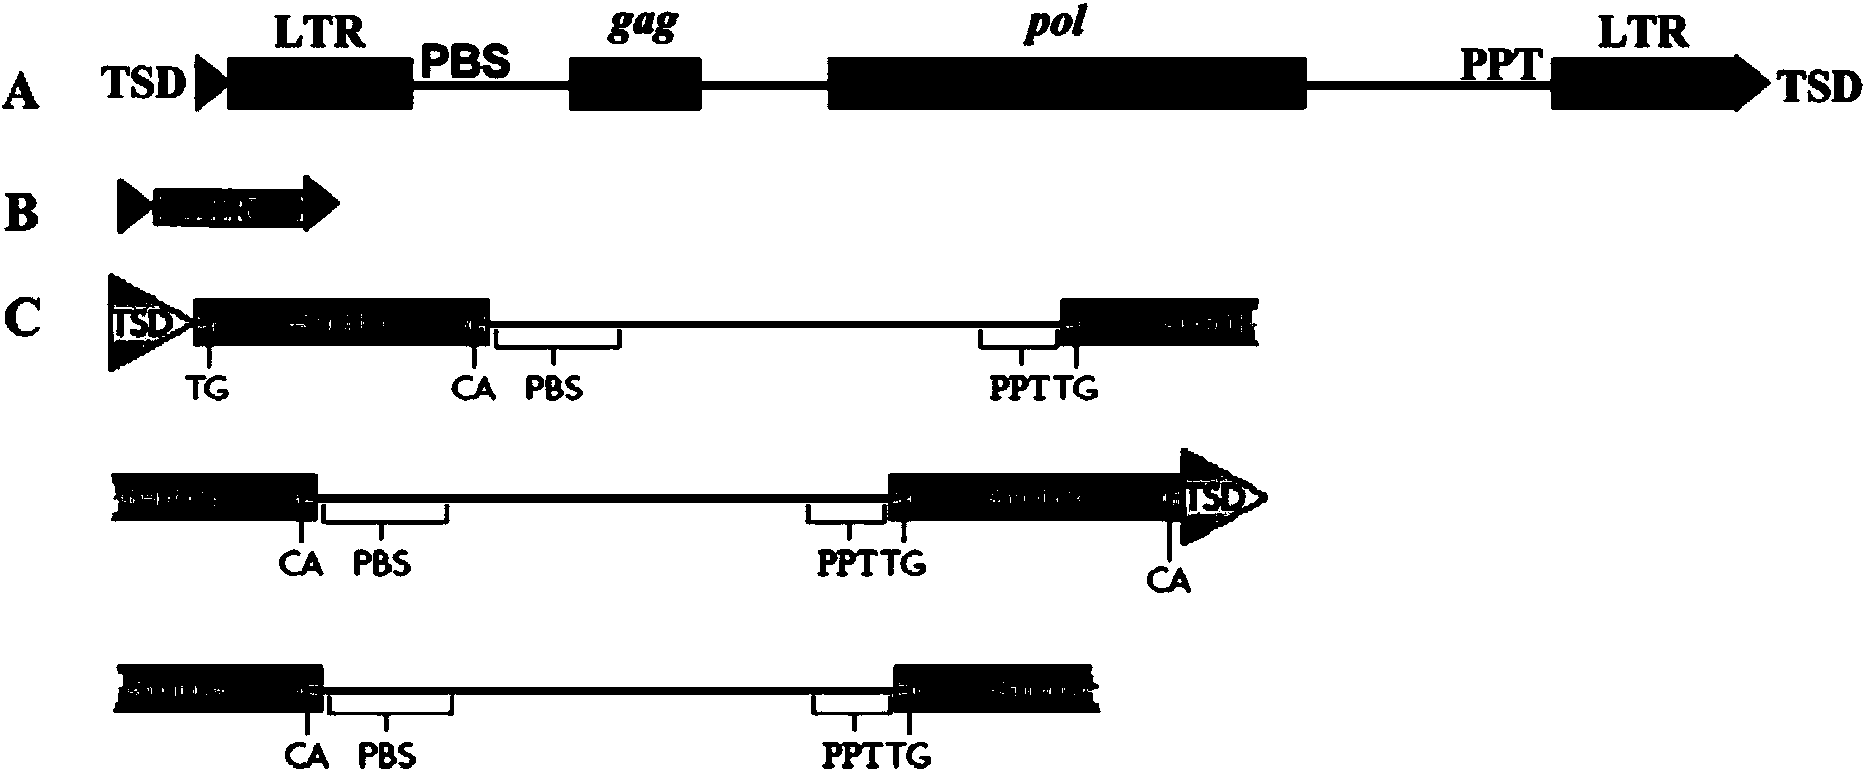 Method for batch inspection of plant genome LTR-retrotransposon